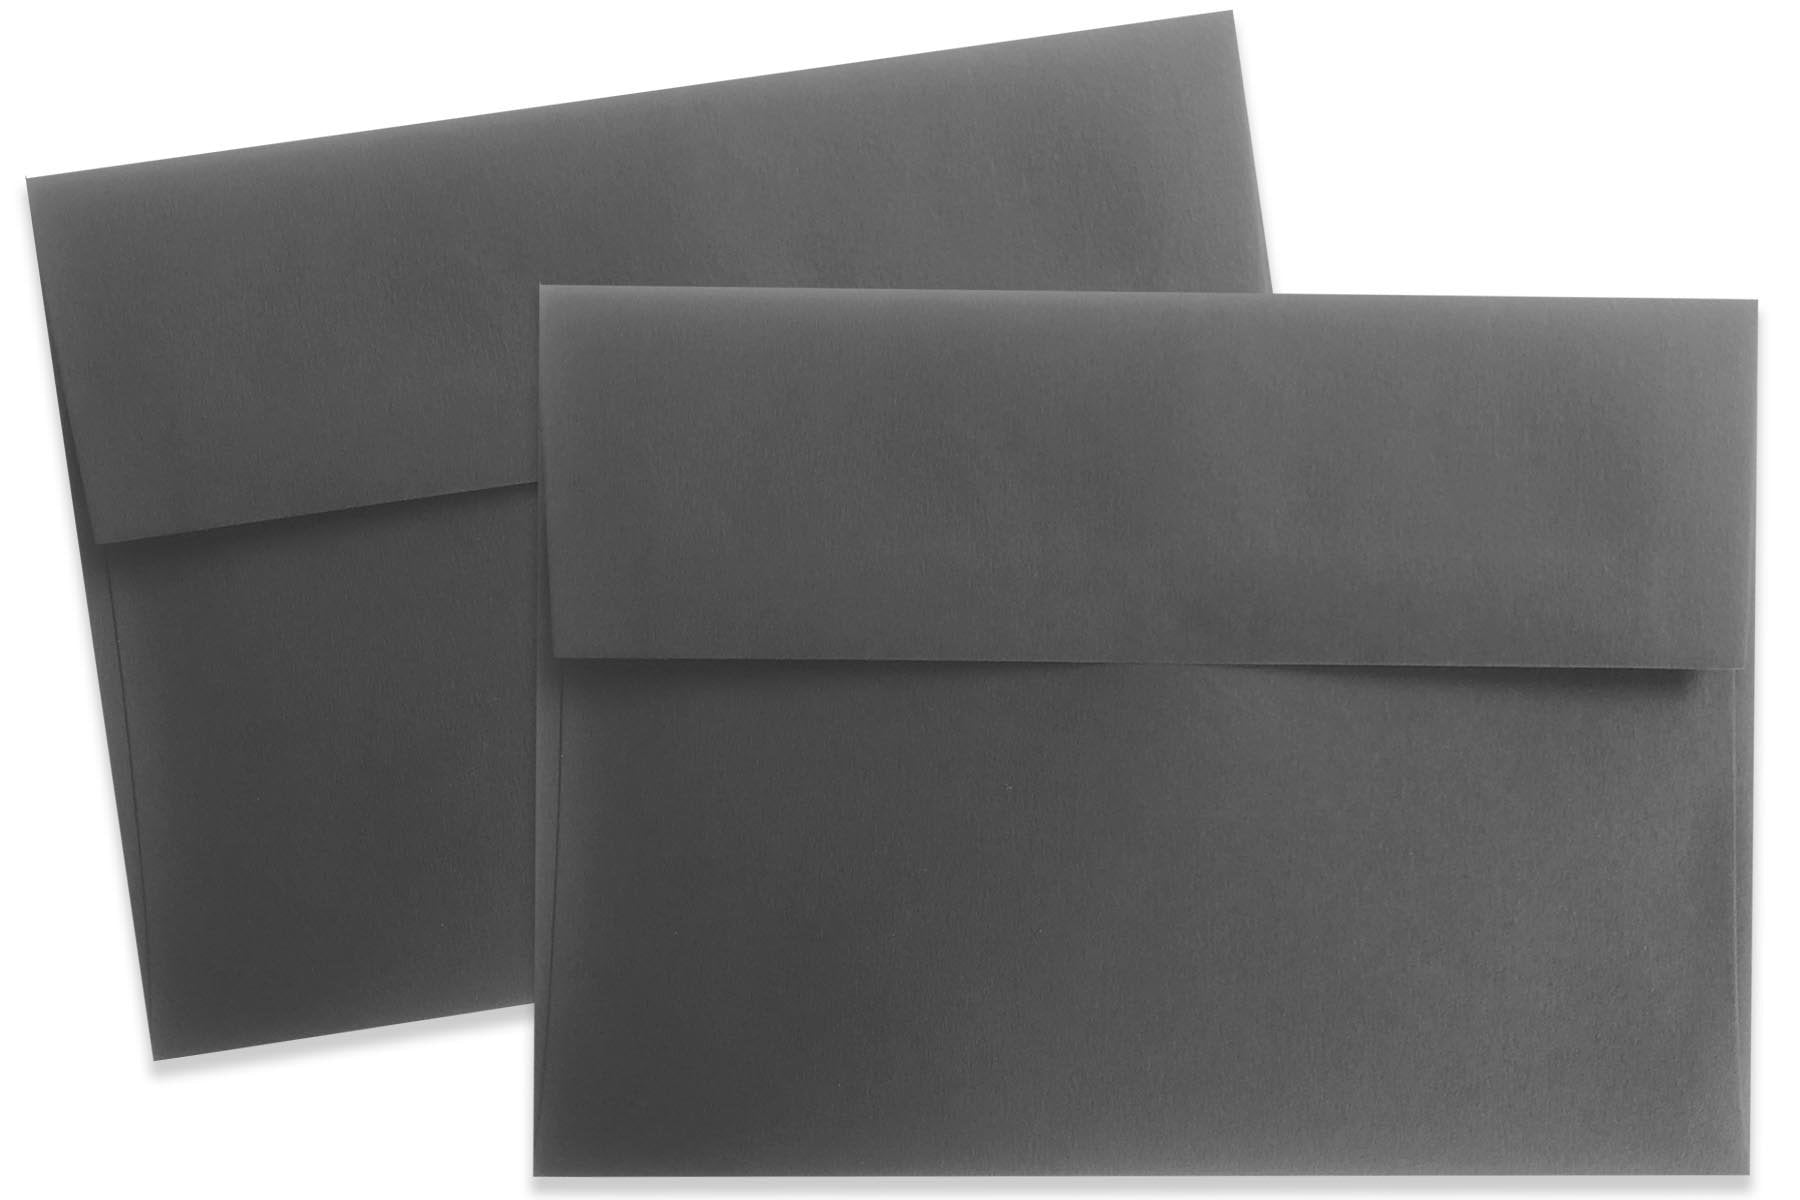 20PCS Colorful Envelopes Solid Color Envelope Stationary 7 x 5